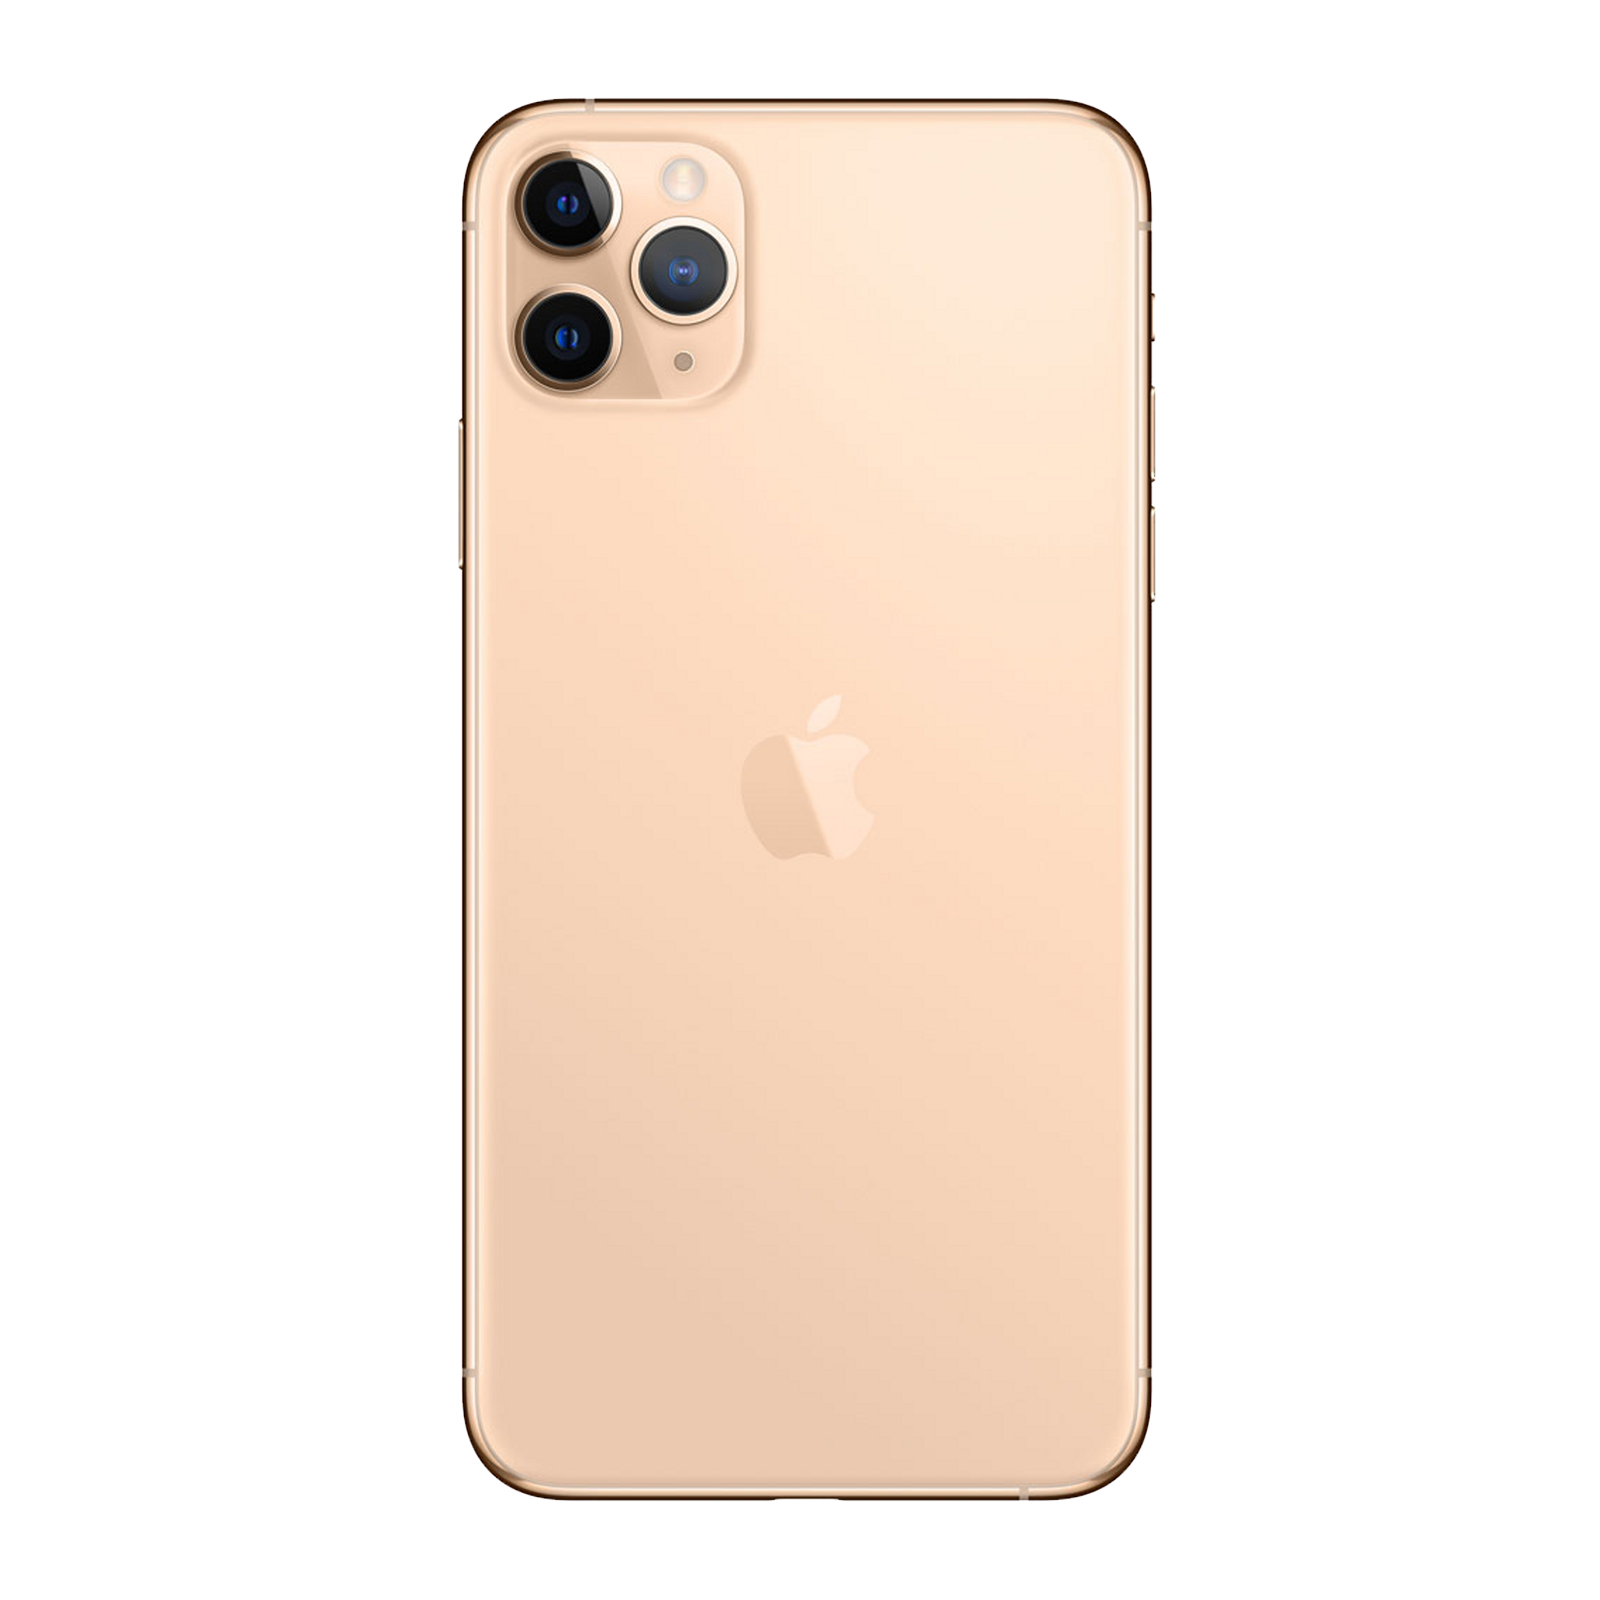 Apple iPhone 11 Pro 512GB Gold Pristine - Unlocked